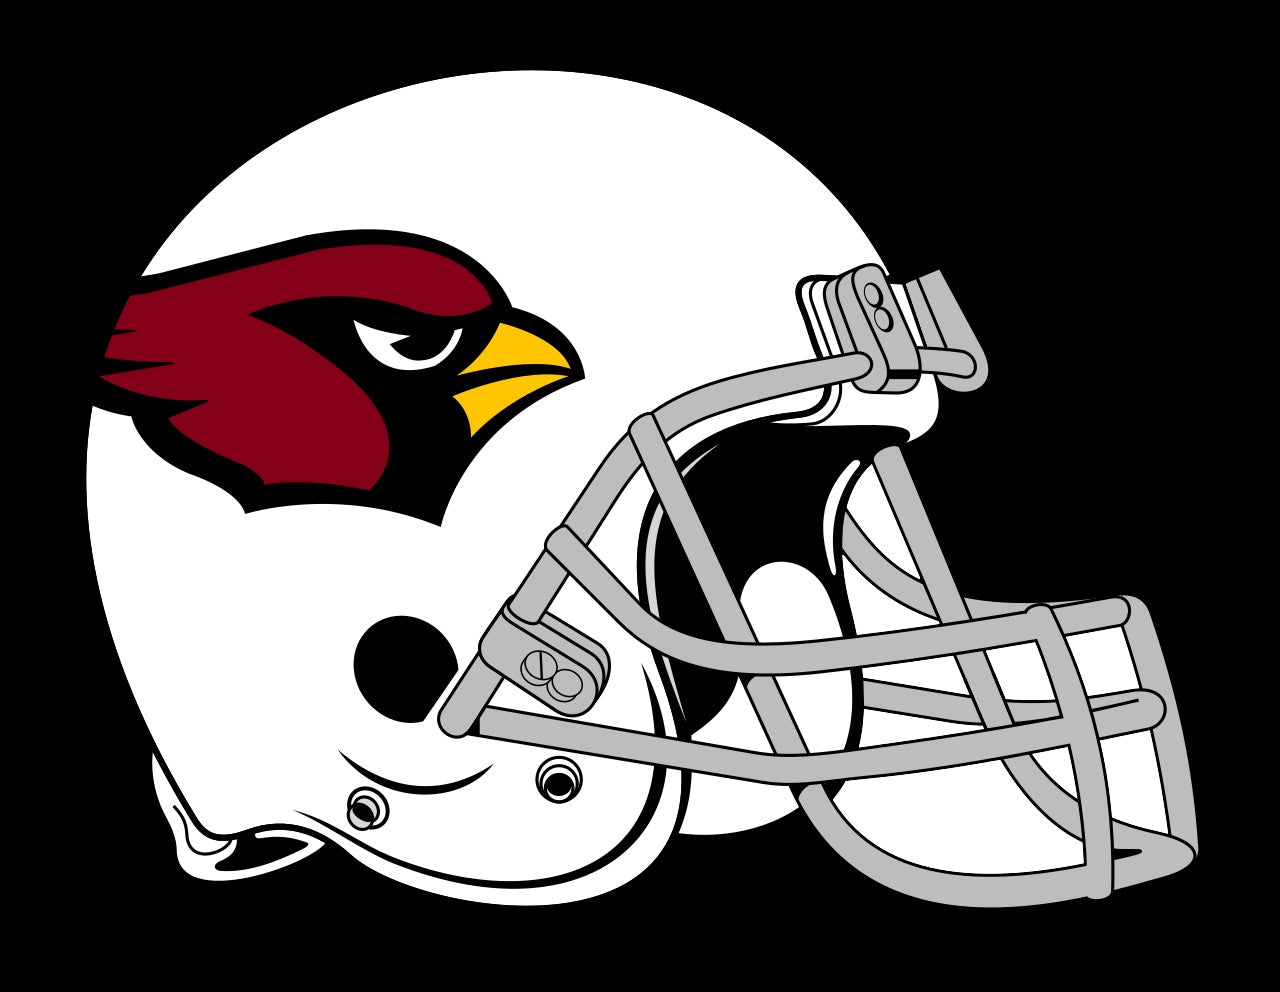 cardinals helmet